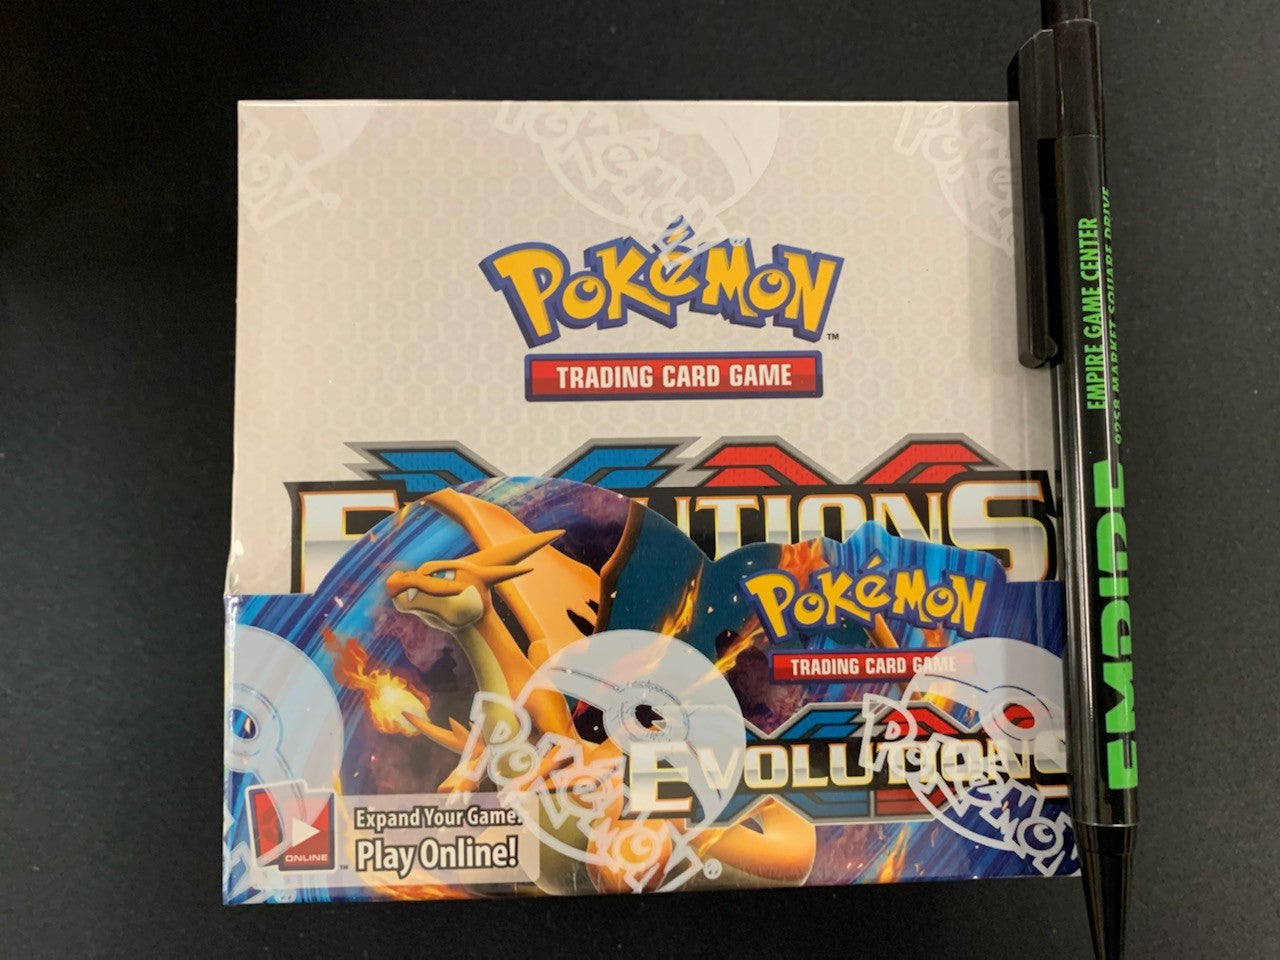 SALPITOYS Pokemon XY Evolutions Sealed Booster Box 36 Pack( 360